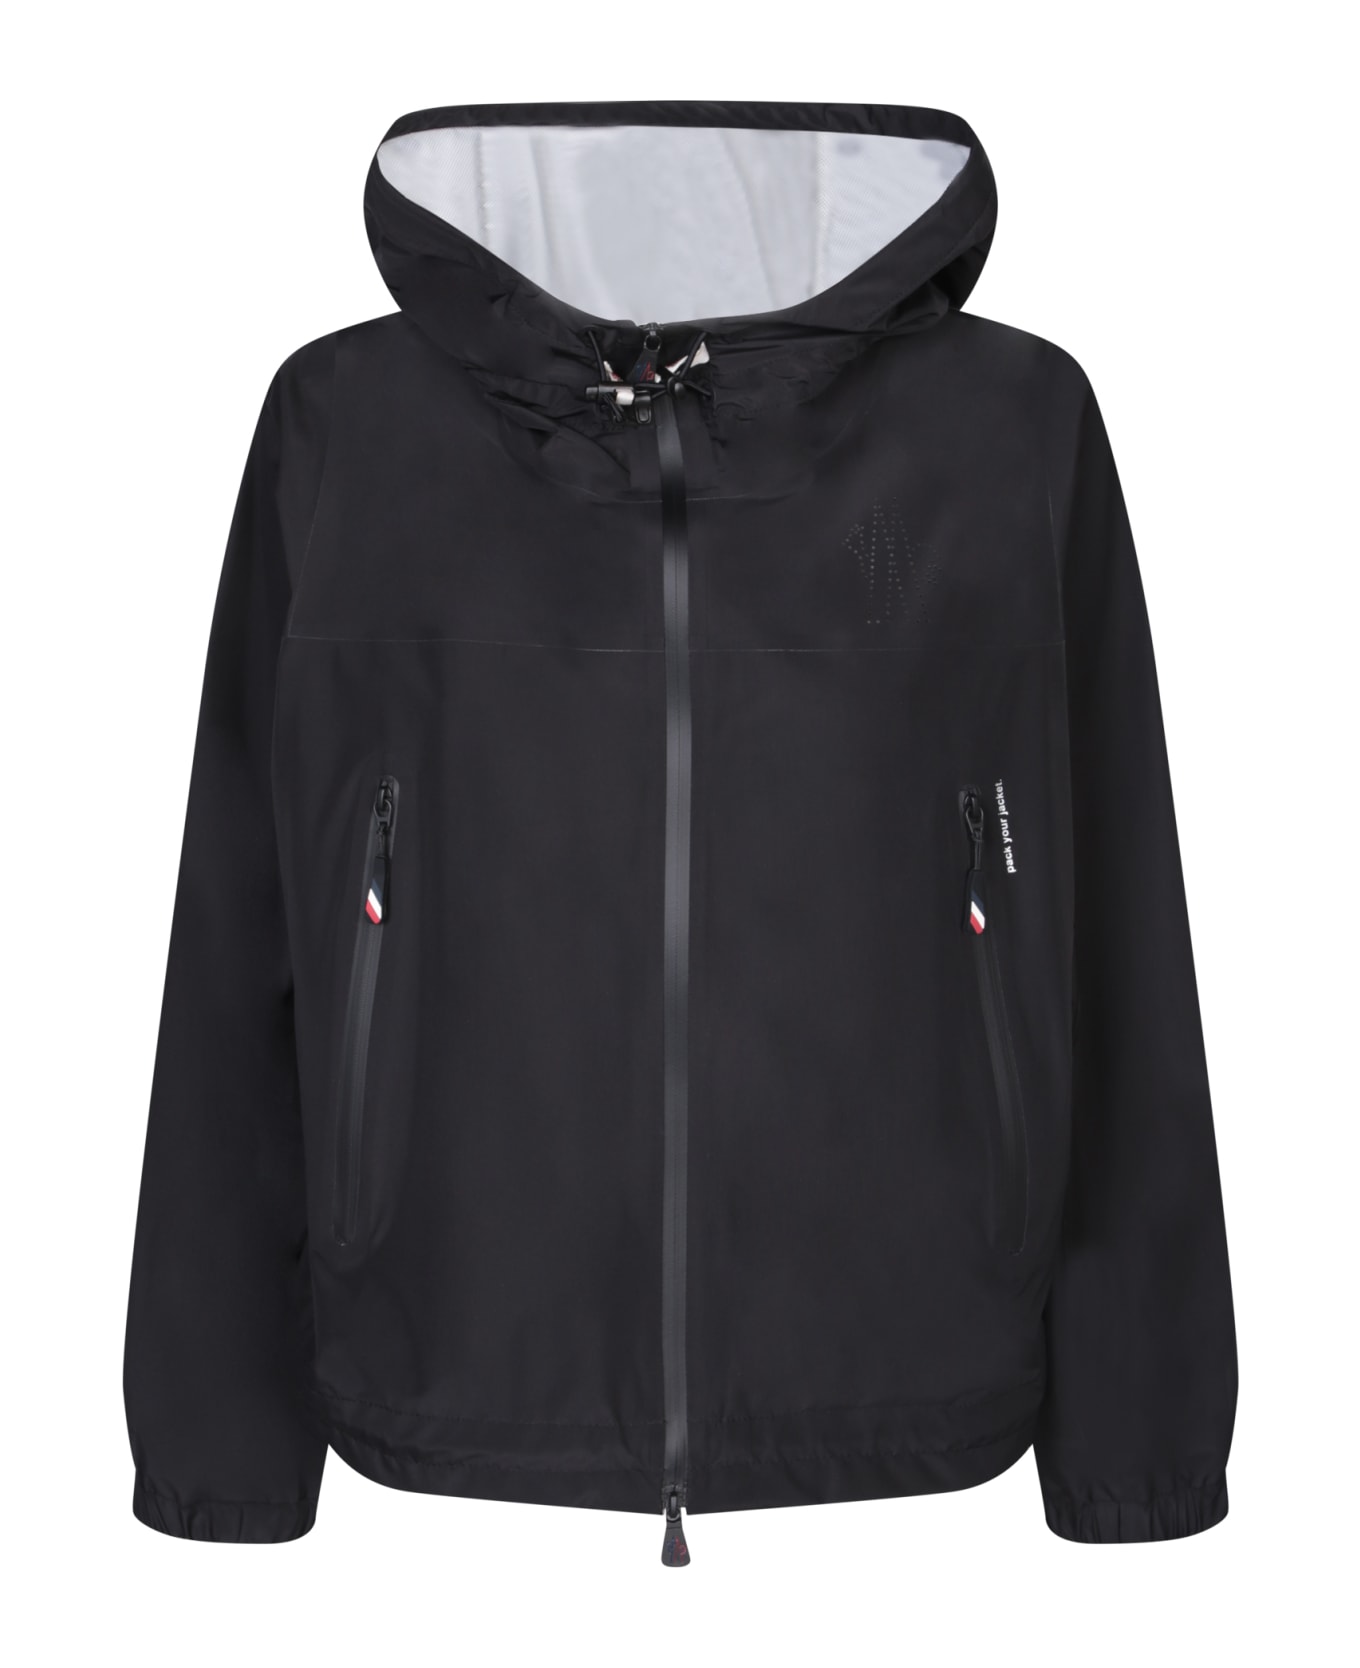 Moncler Grenoble Fanes Technical Fabric Jacket - Black ジャケット